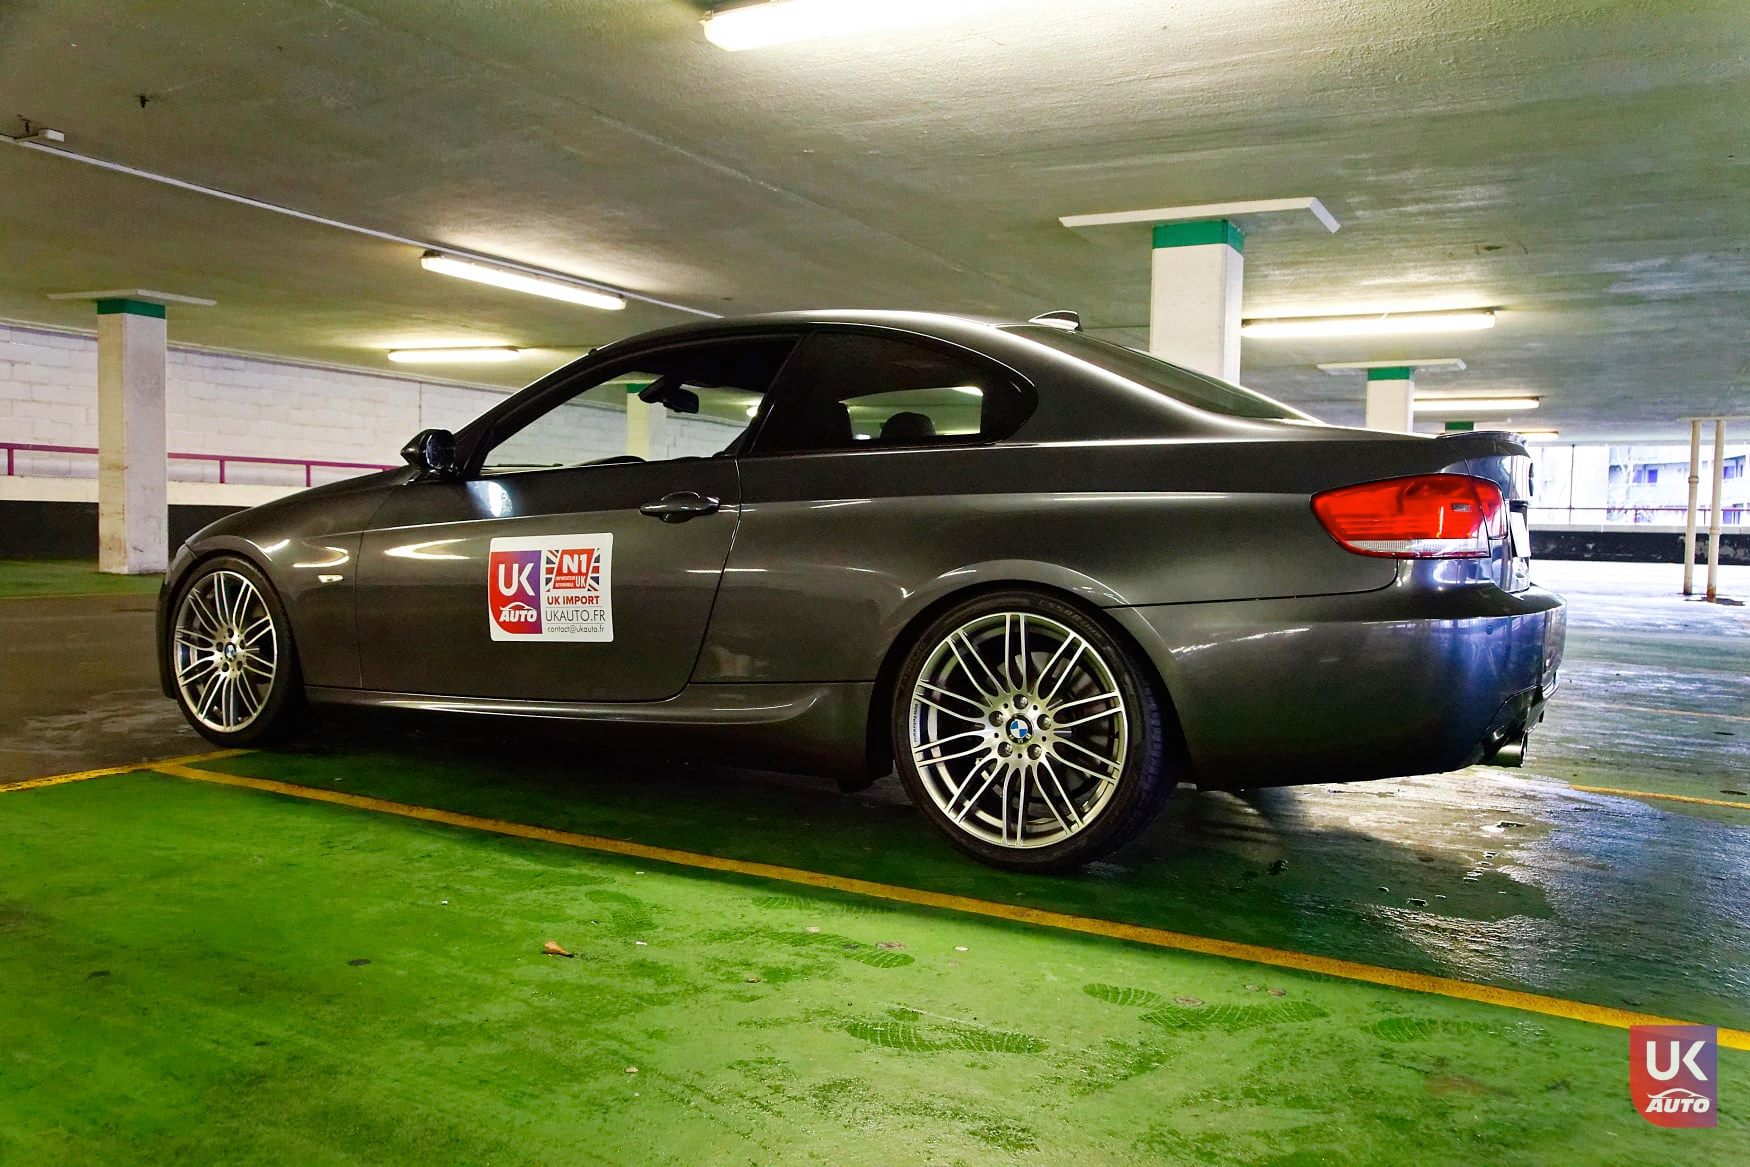 IMPORT BMW 335I importation d’angleterre vers la france